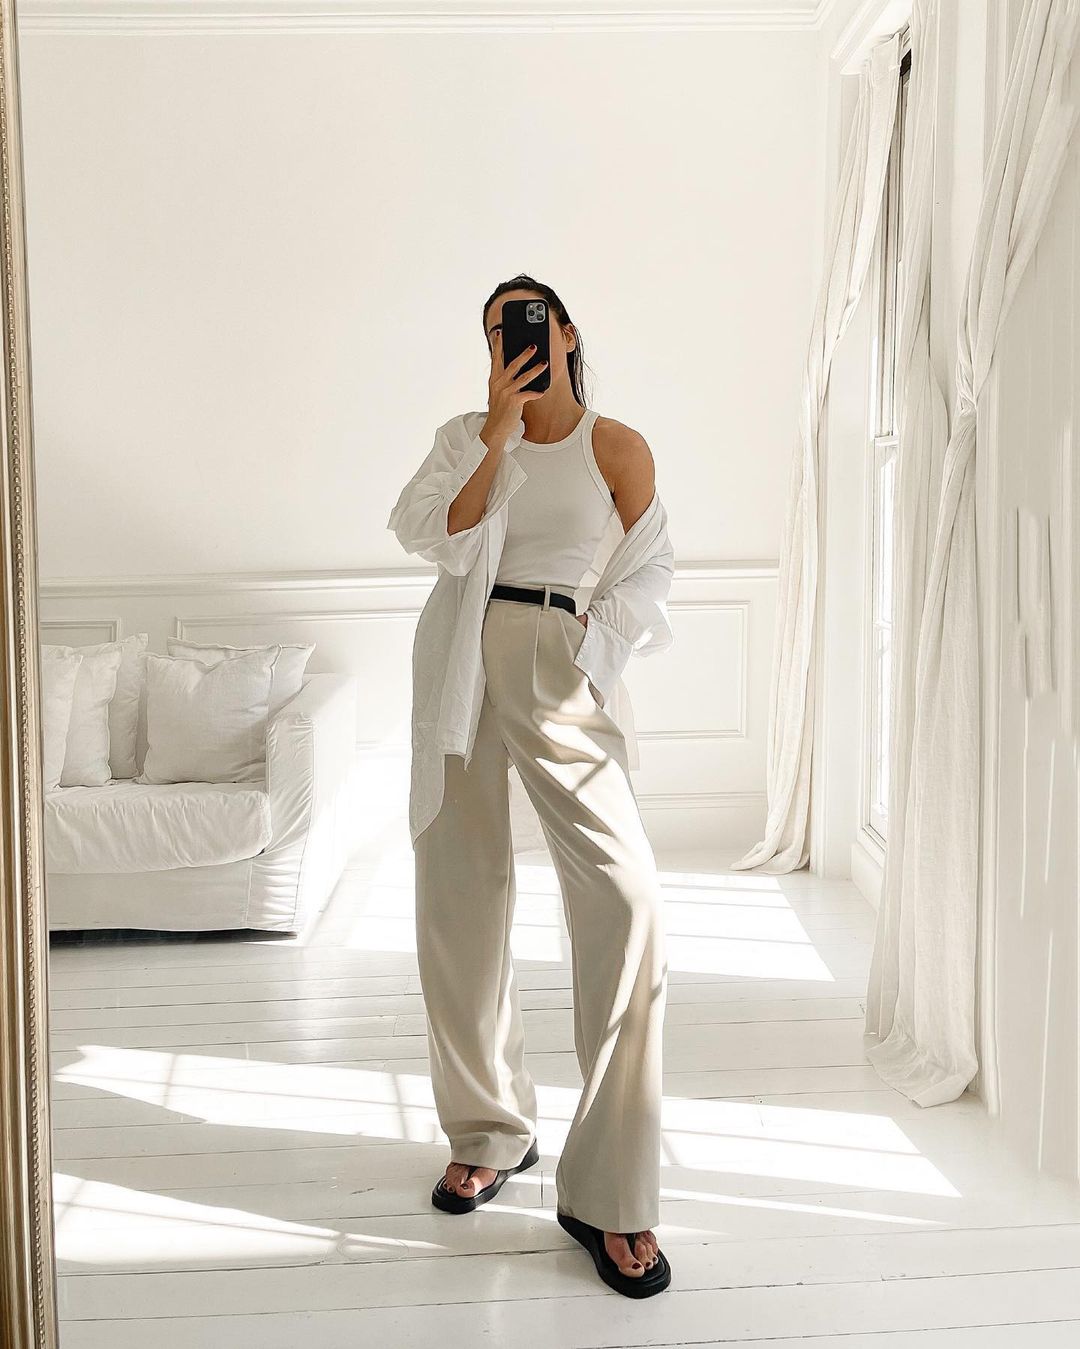 H&M Linen Pieces: Jessica Skye